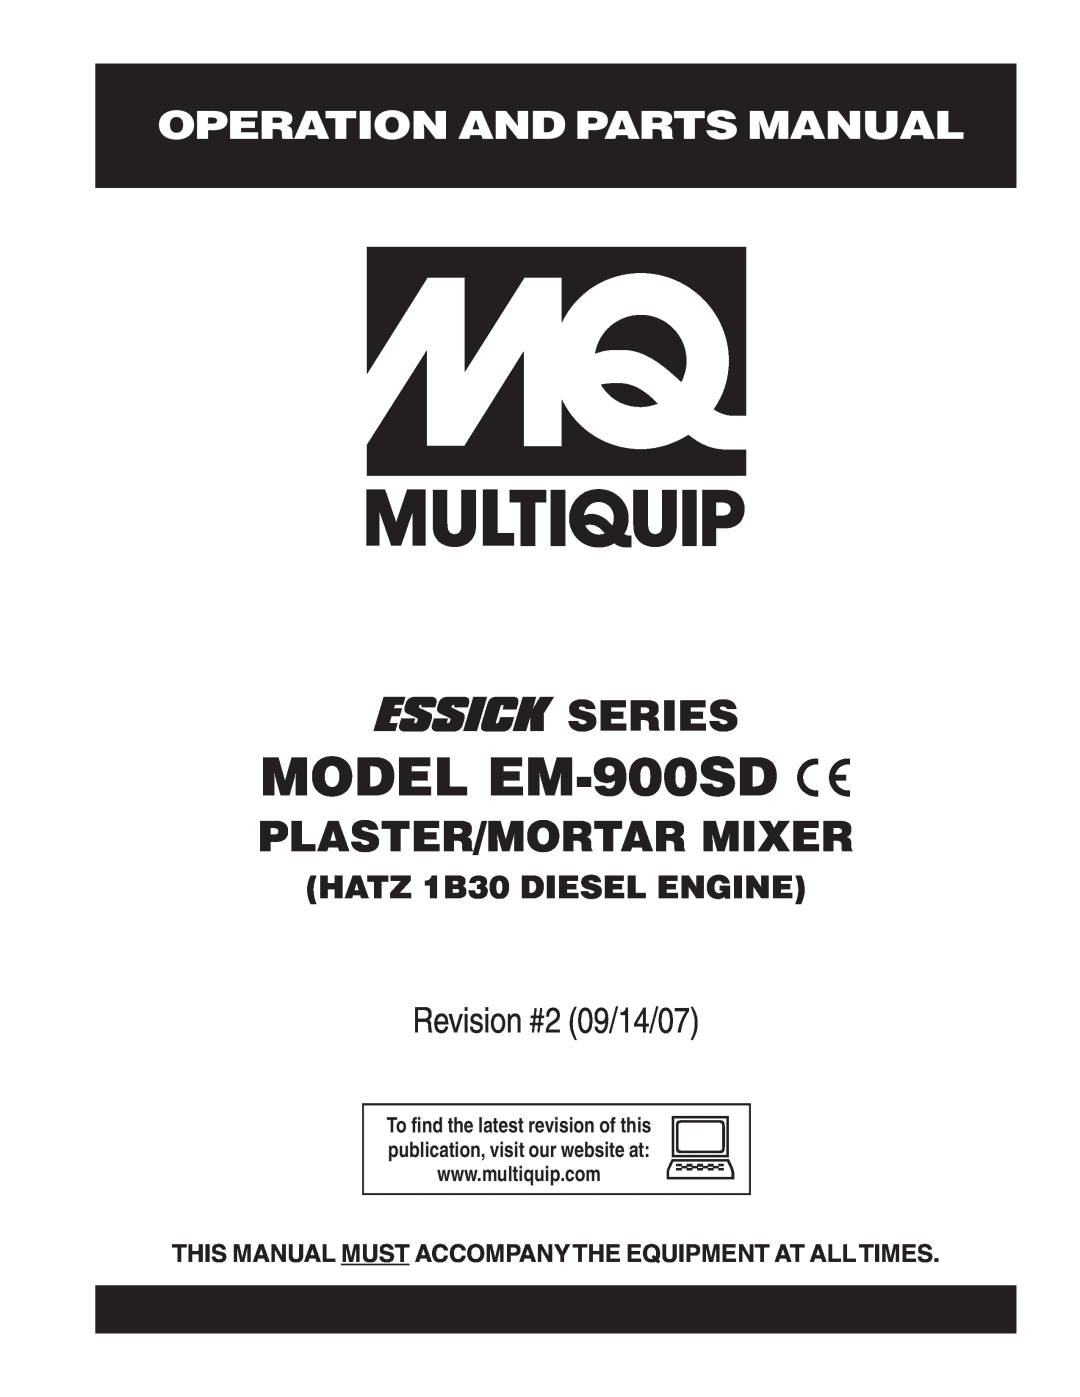 Multiquip manual Operation & Parts Manual, Hatz Diesel Engine, MODEL EM-900SD, Series, Plaster/Mortar Mixer 